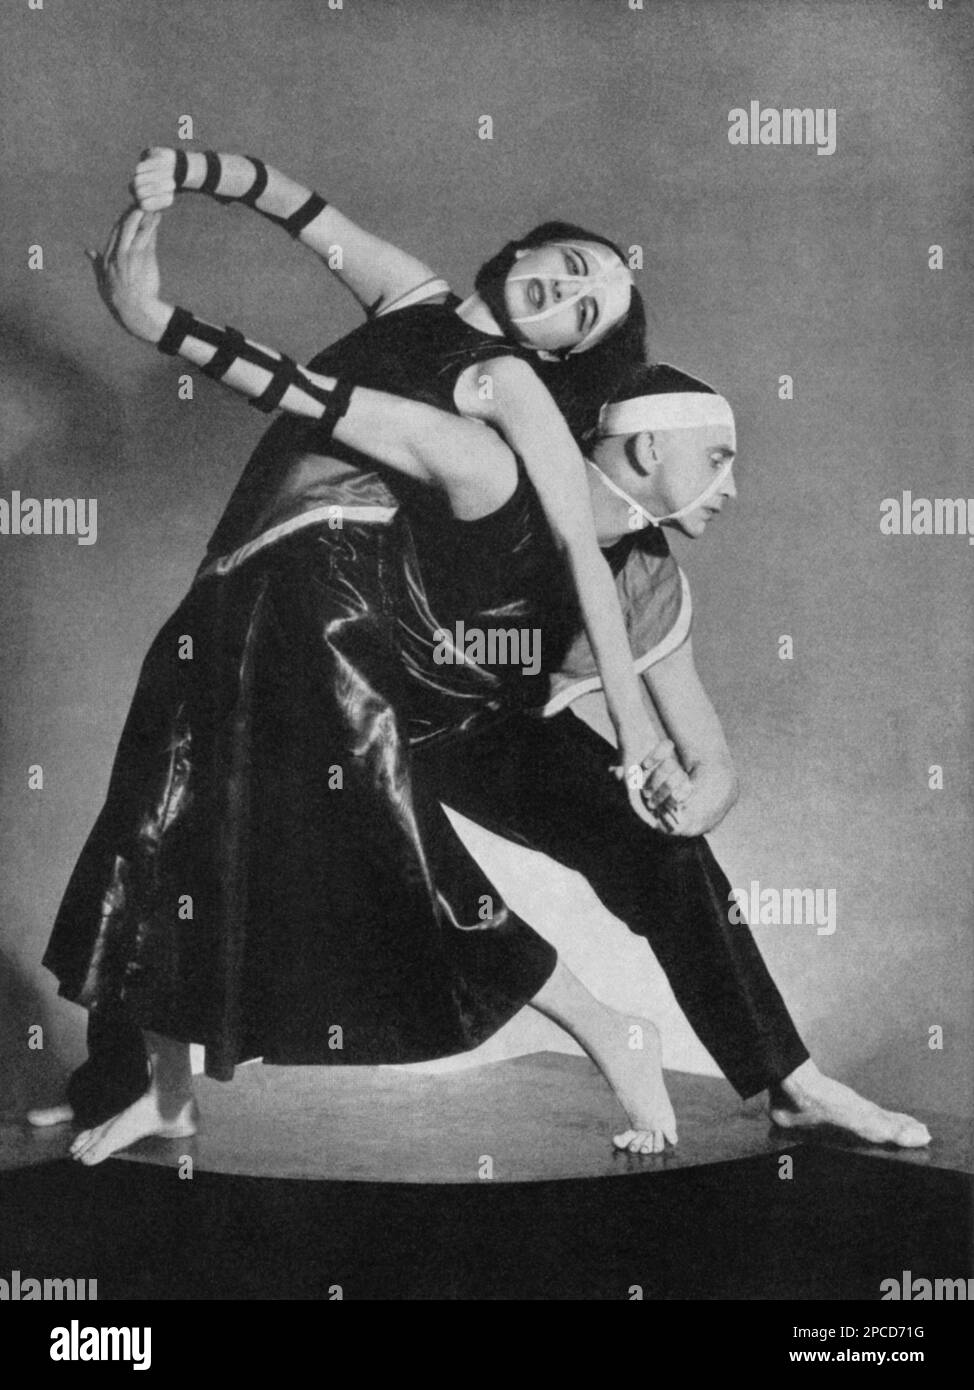 1935 ca , USA : The avantgarde german  dancer ,  choreographer and film actor HARALD KREUTZBERG ( 1902 in Reichenberg -  1968 in Gumligen , Bern ) with RUTH PAGE  in BACCHANAL , music by MALIPIERO . Photo by Seymour , Chicago .  MODERNISMO - ARTD DECO -   DANCE - DANZA - COREOGRAFO - COREOGRAPHY - COREOGRAFIA -  ballerino  - EURYTHMIC DANCE - avantgarde - DANZA - CINEMA - BALLETTO - TEATRO  - MAN DANCER  - AVANGUARDIA  - THEATER - THEATRE - moderno - MODERNISM - THEATRE - THEATER - TEATRO -  duo - ballerina - ART DECO - FUTURISMO - FUTURISTA  ----  Archivio GBB Stock Photo